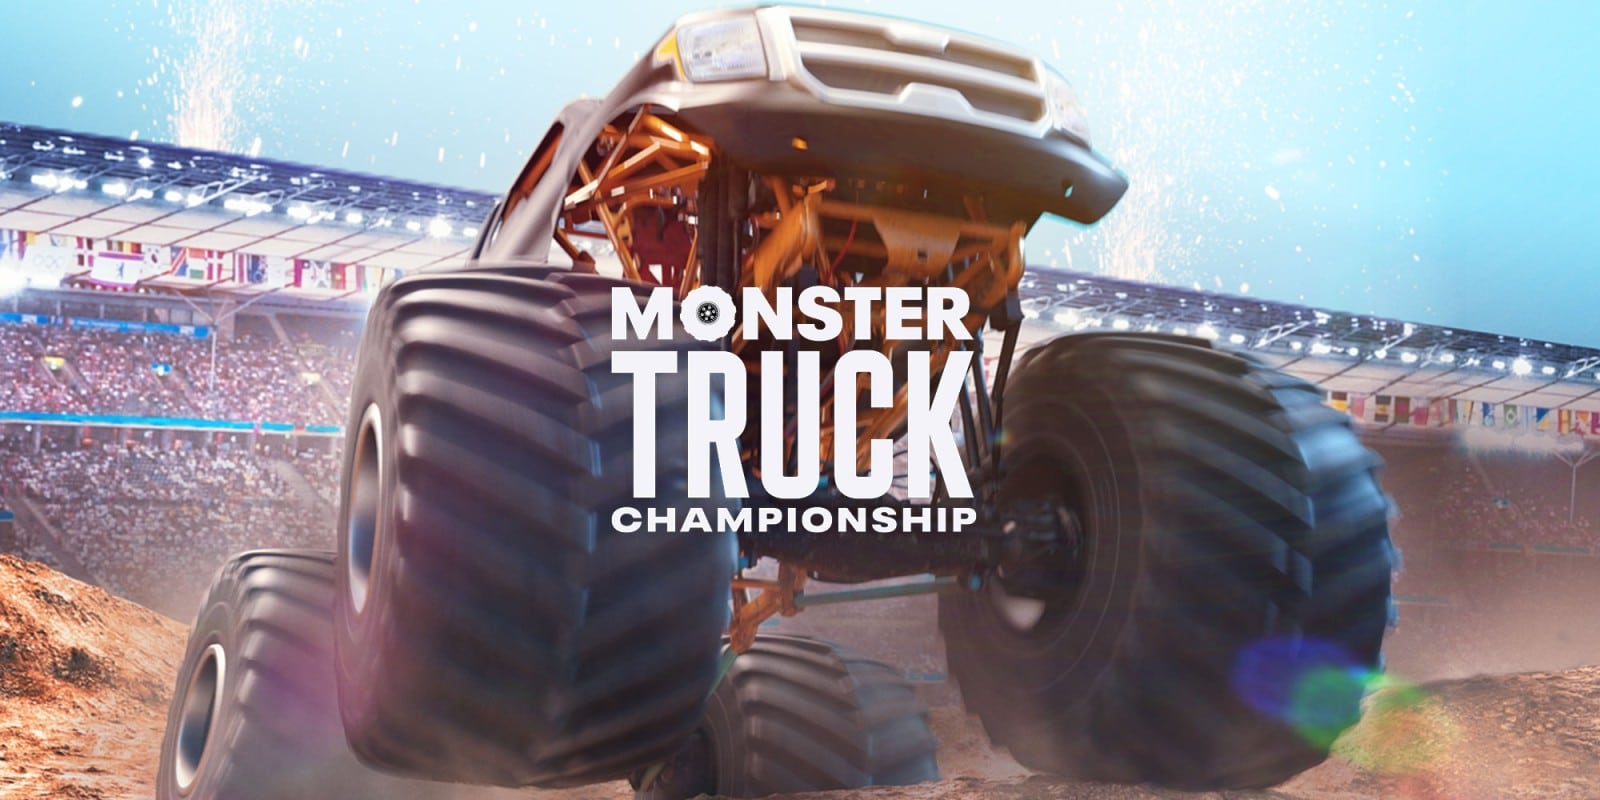 usa 1 monster truck championship season